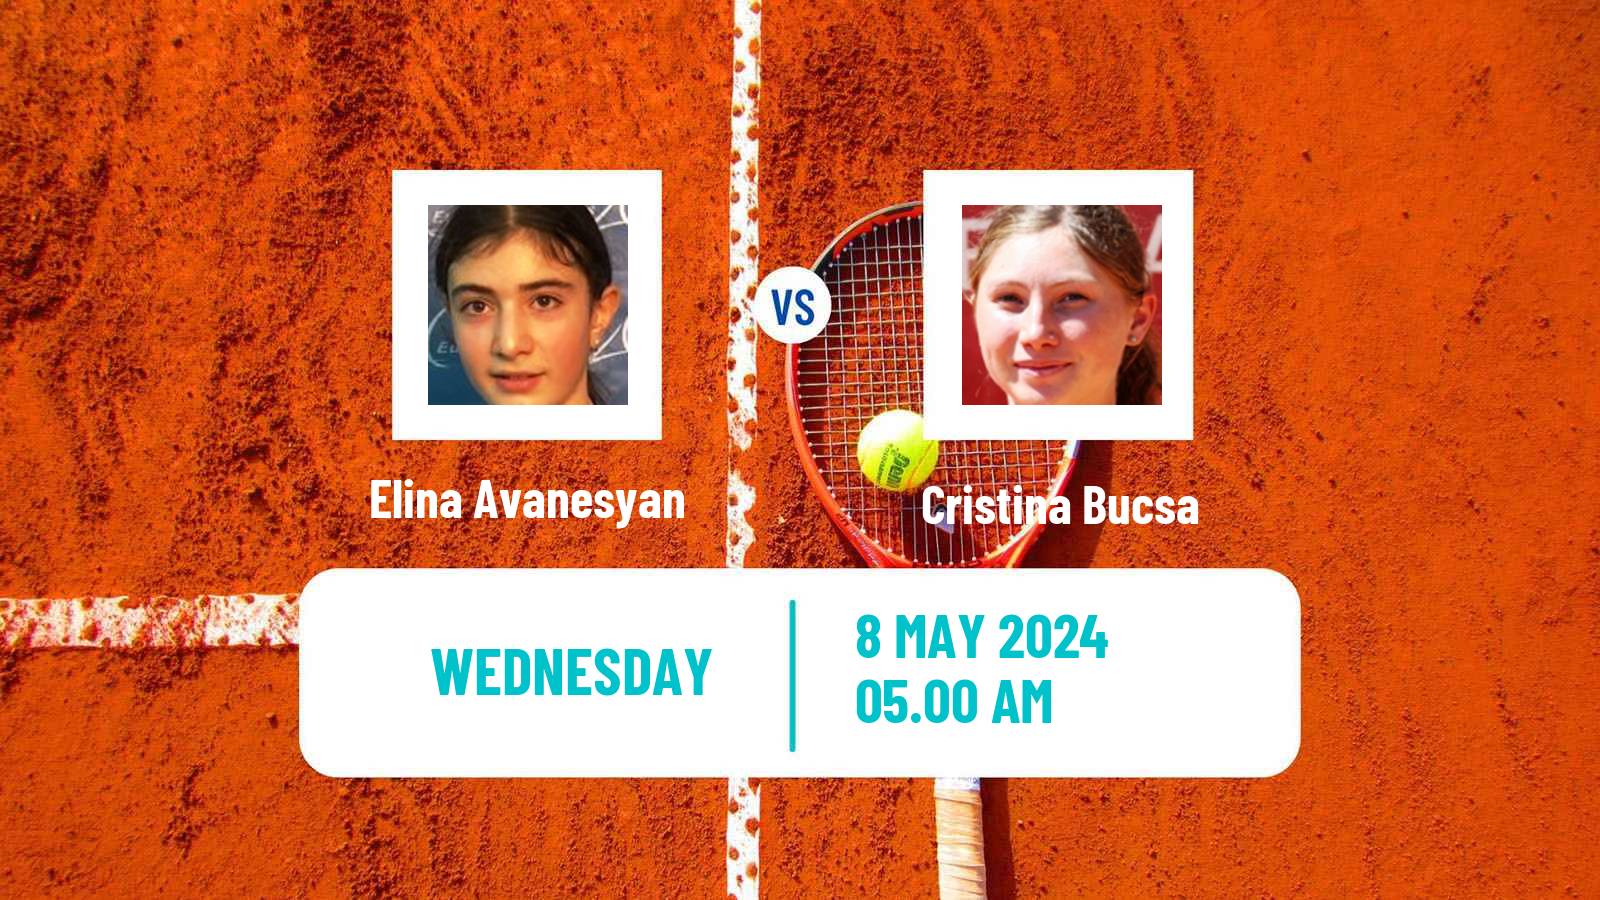 Tennis WTA Roma Elina Avanesyan - Cristina Bucsa